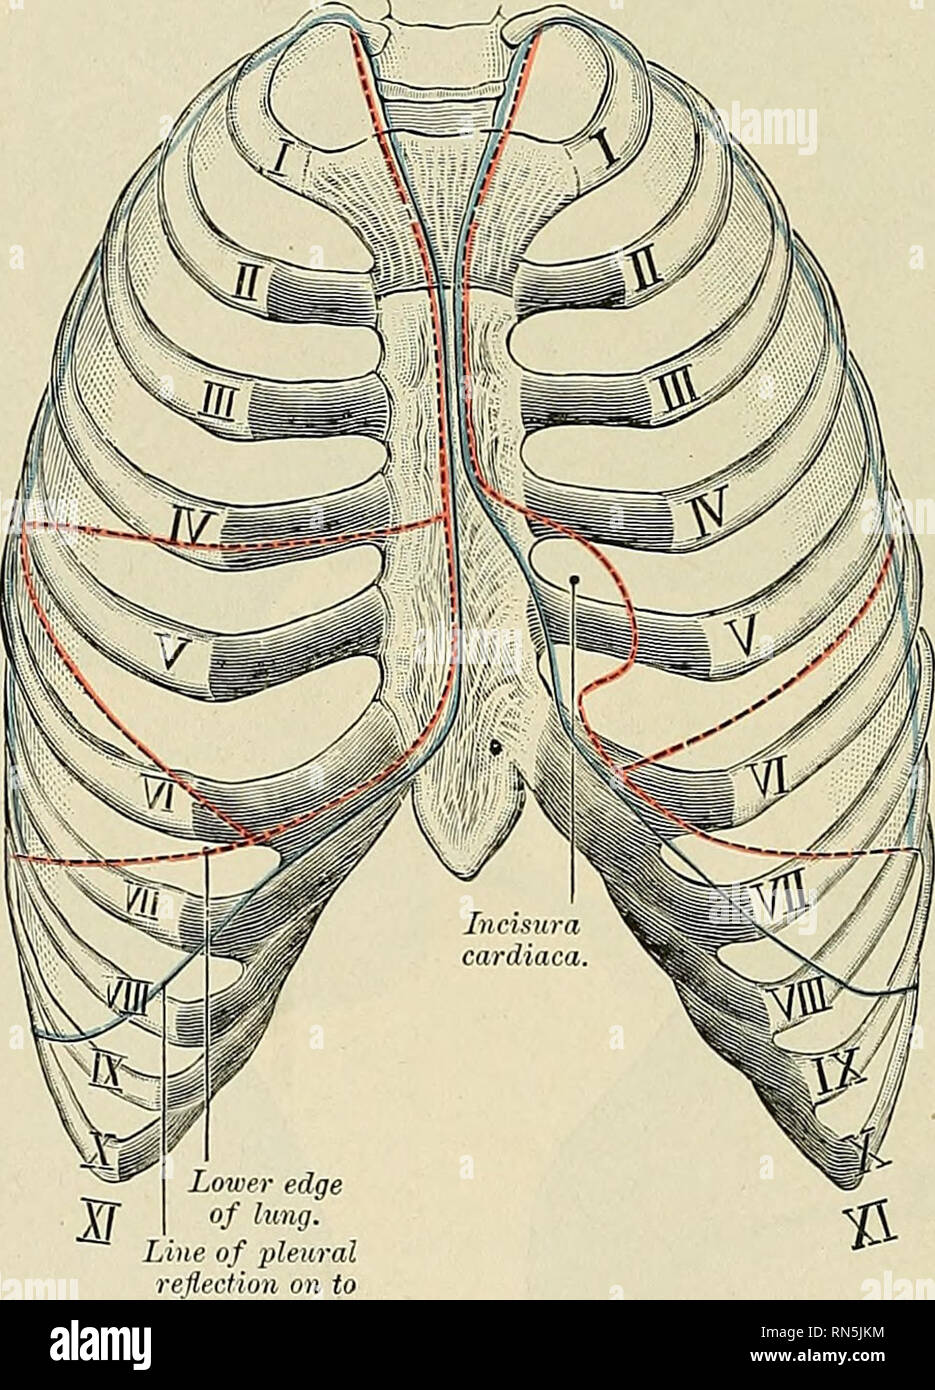 lung anatomy fissures